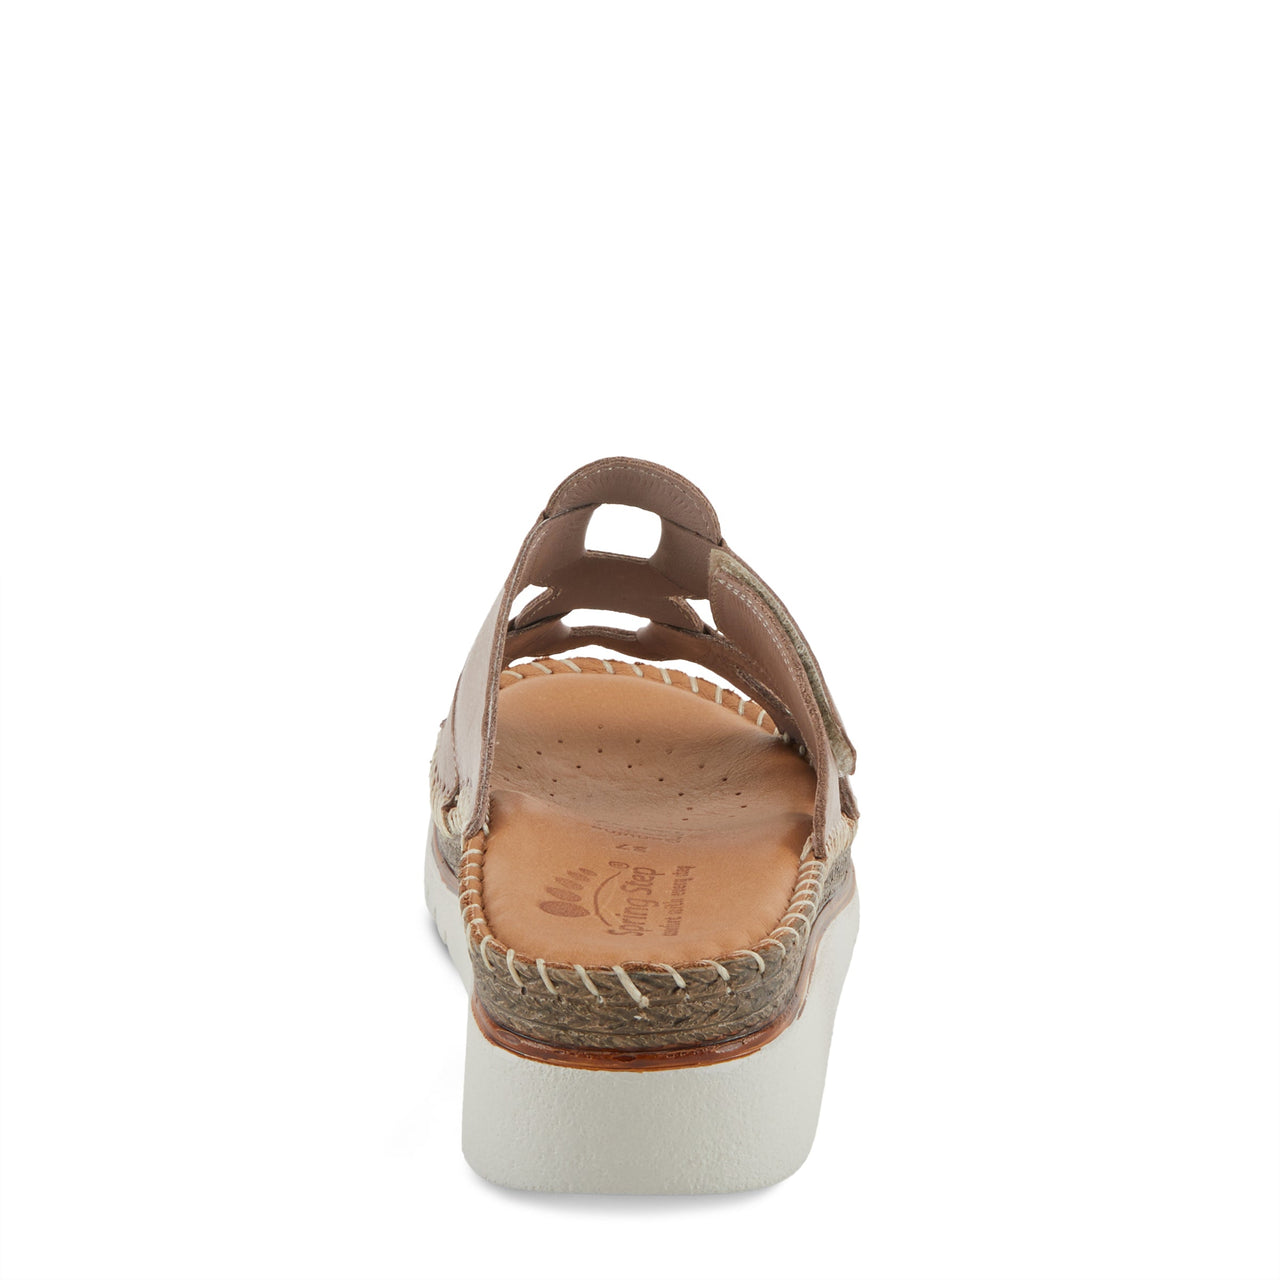  Versatile Spring Step Montera Sandals in Taupe with Cork-inspired Wedge Heel